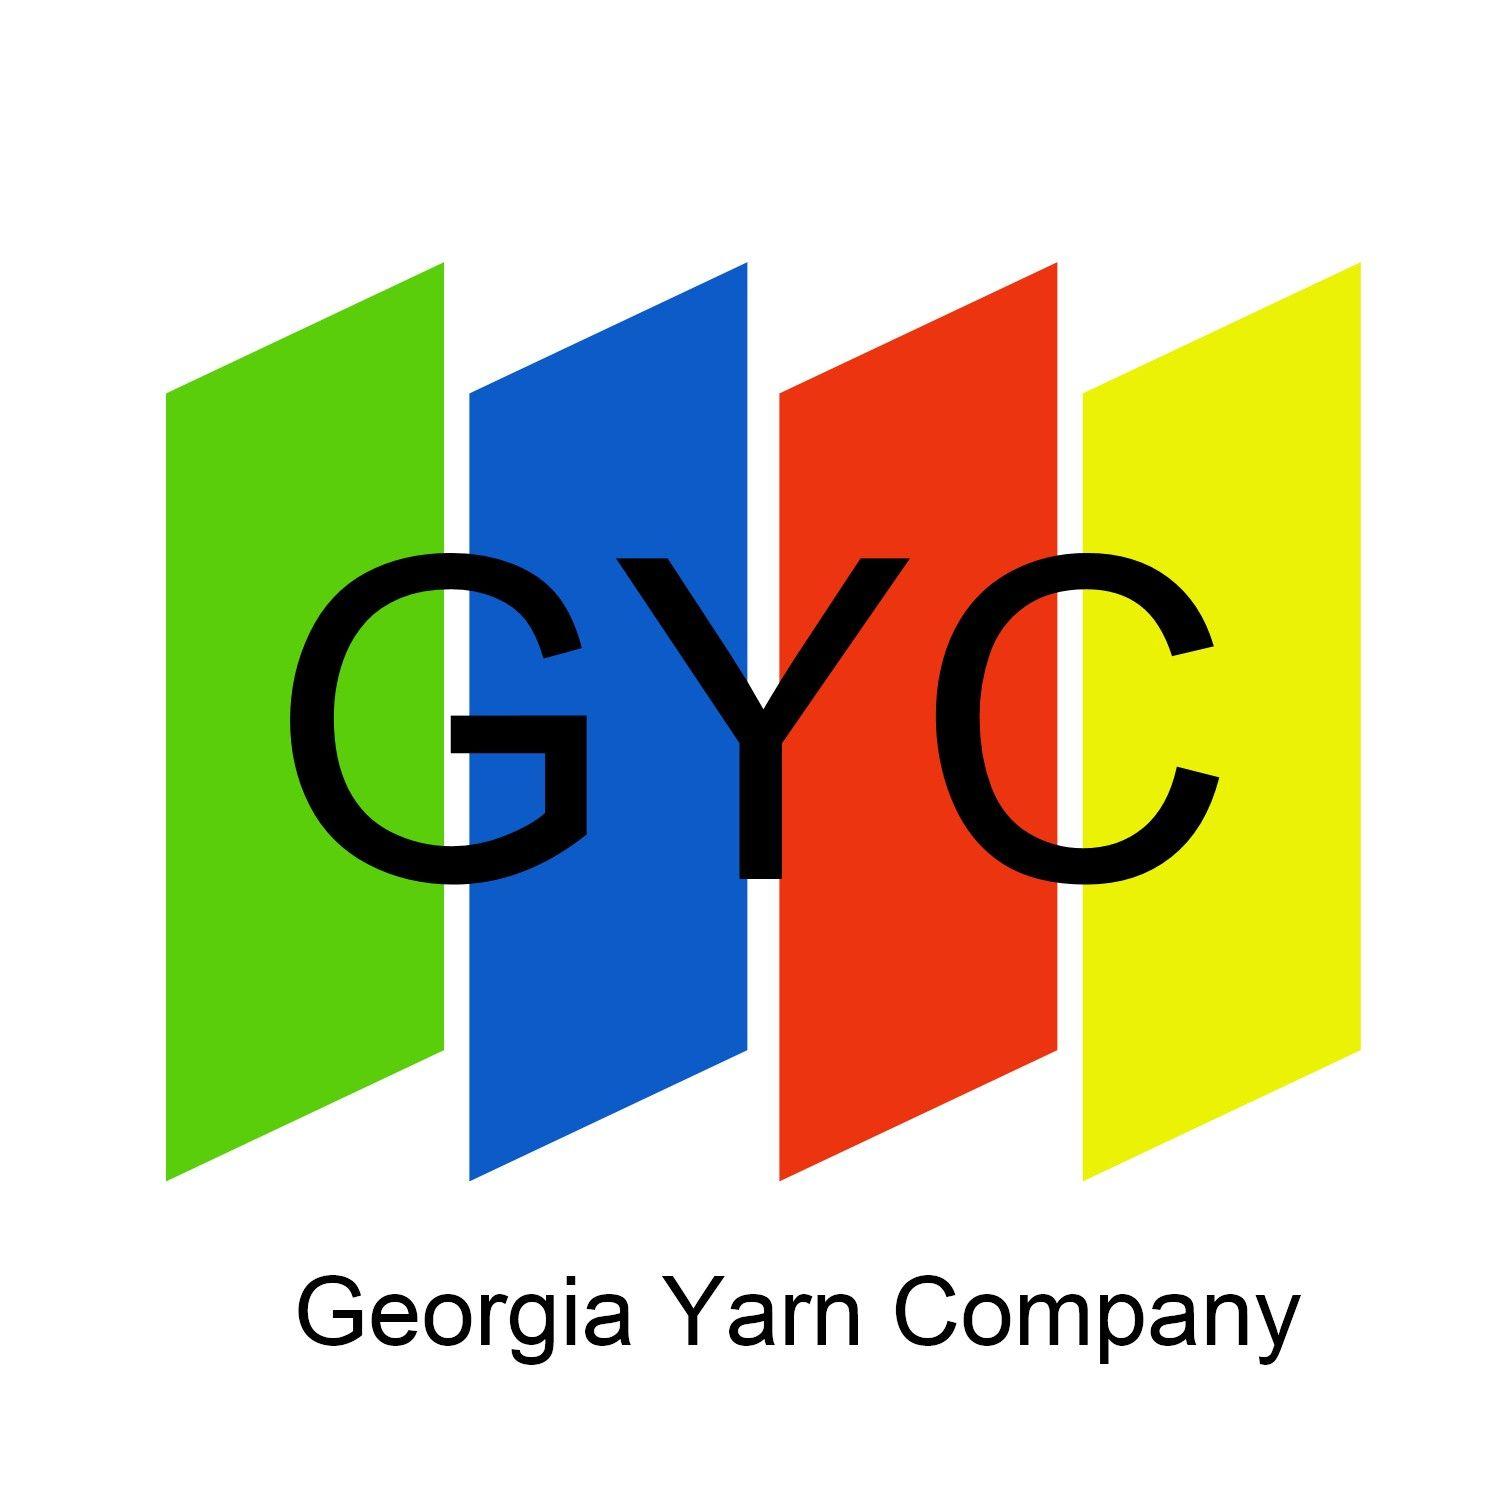 Georgia Red and Blue Business Logo - Georgia Yarn Company